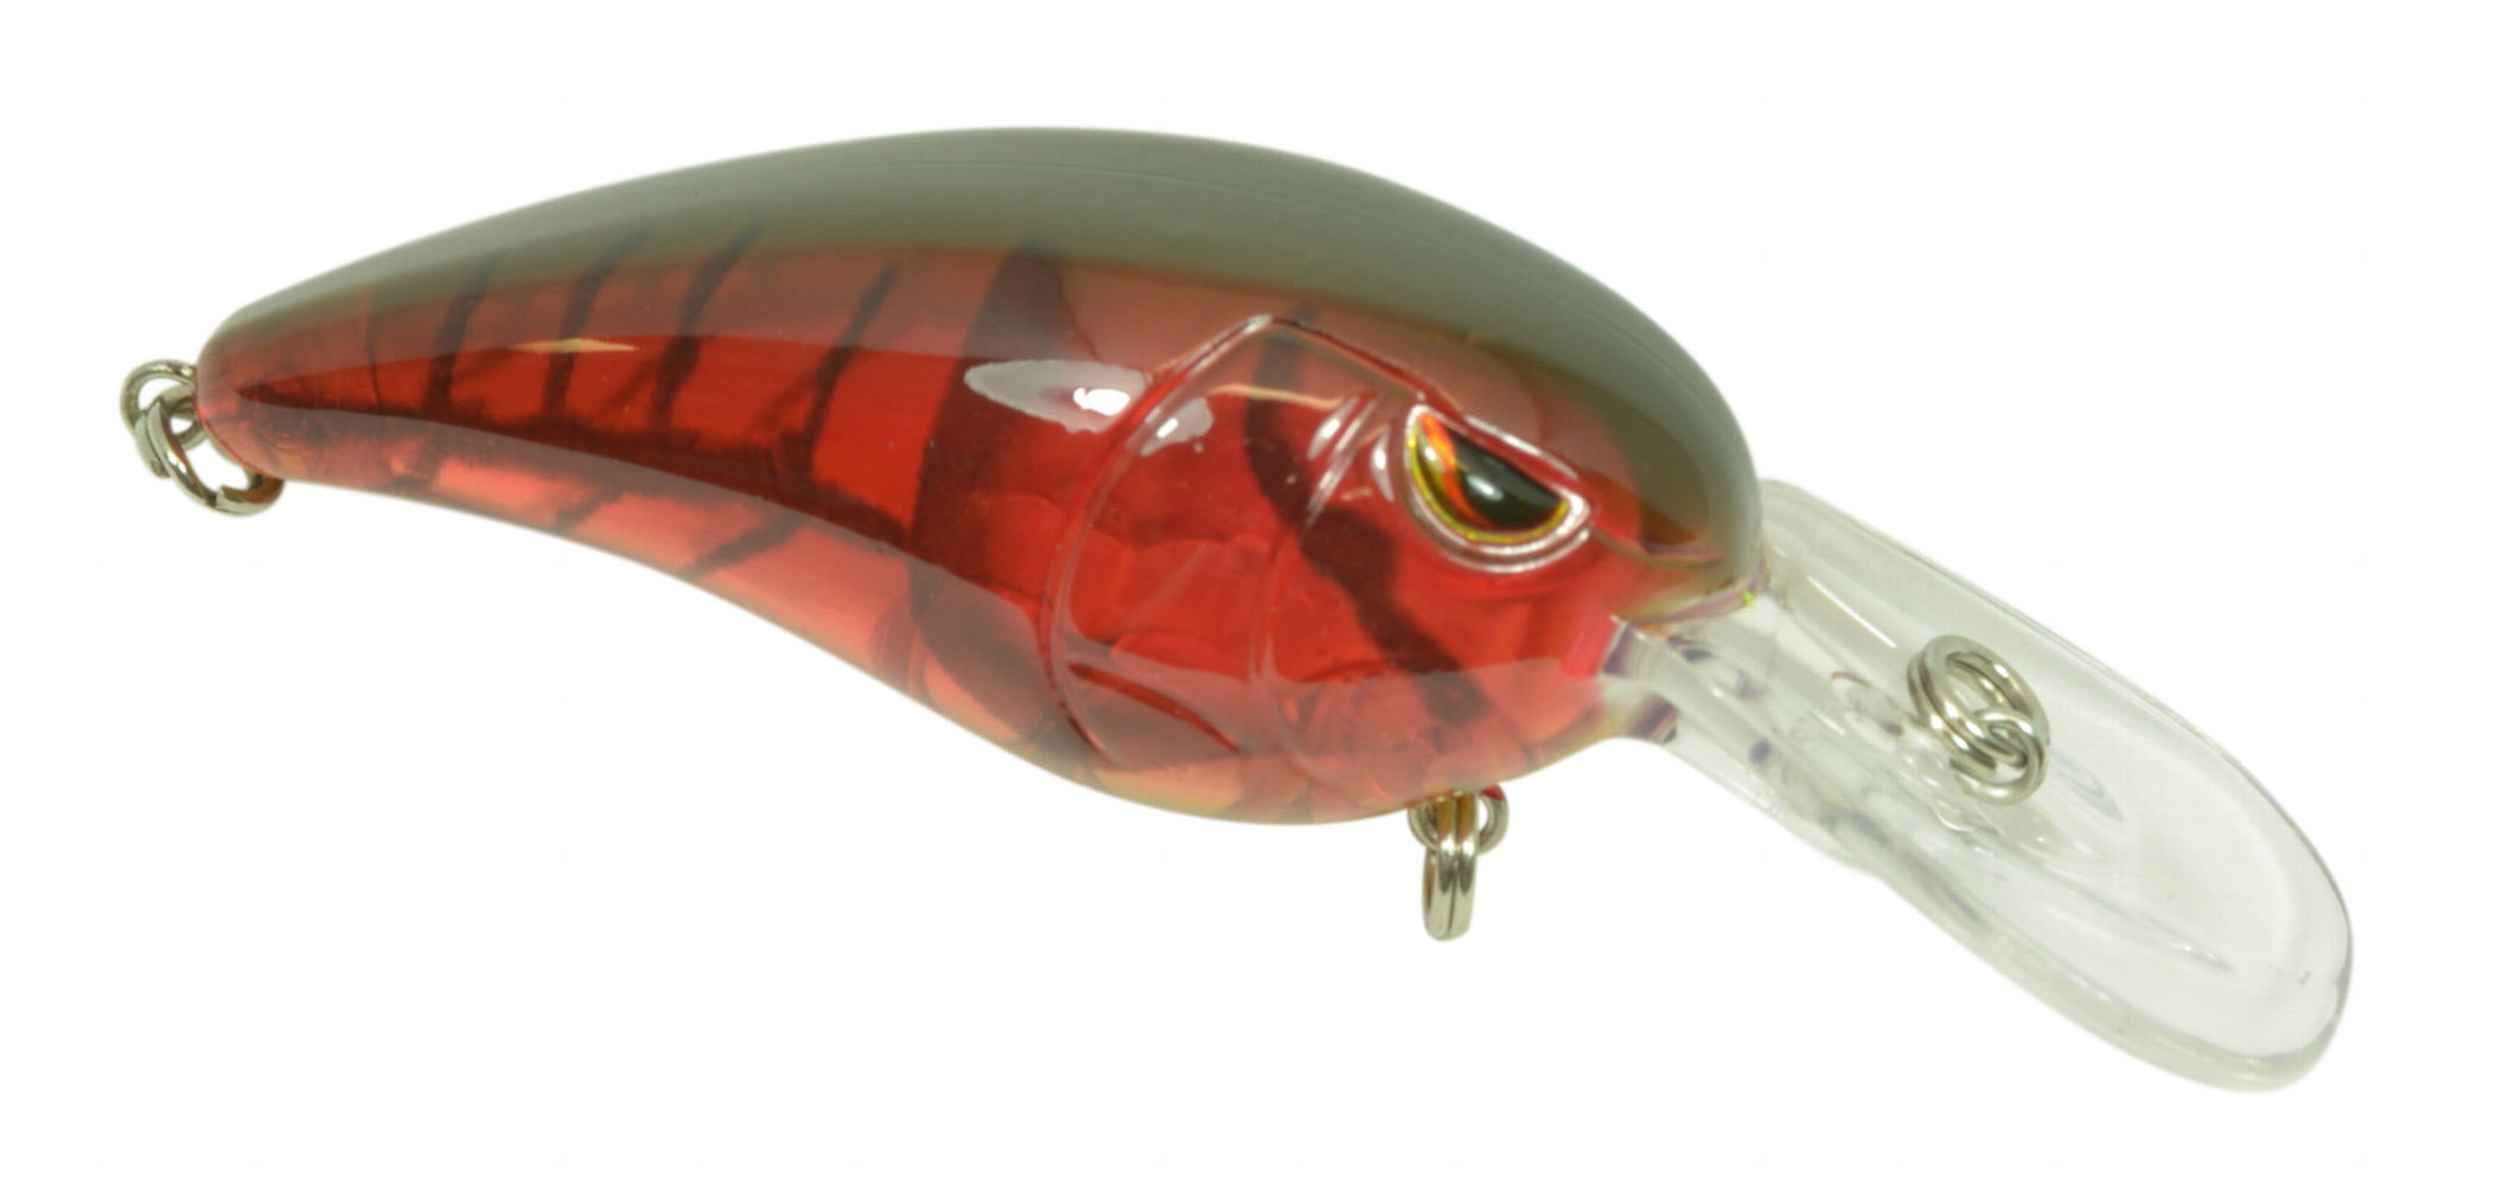 SPRO SRC50RBG Rock Crawler Red Bug FW Crankbait Fishing Lure for sale online